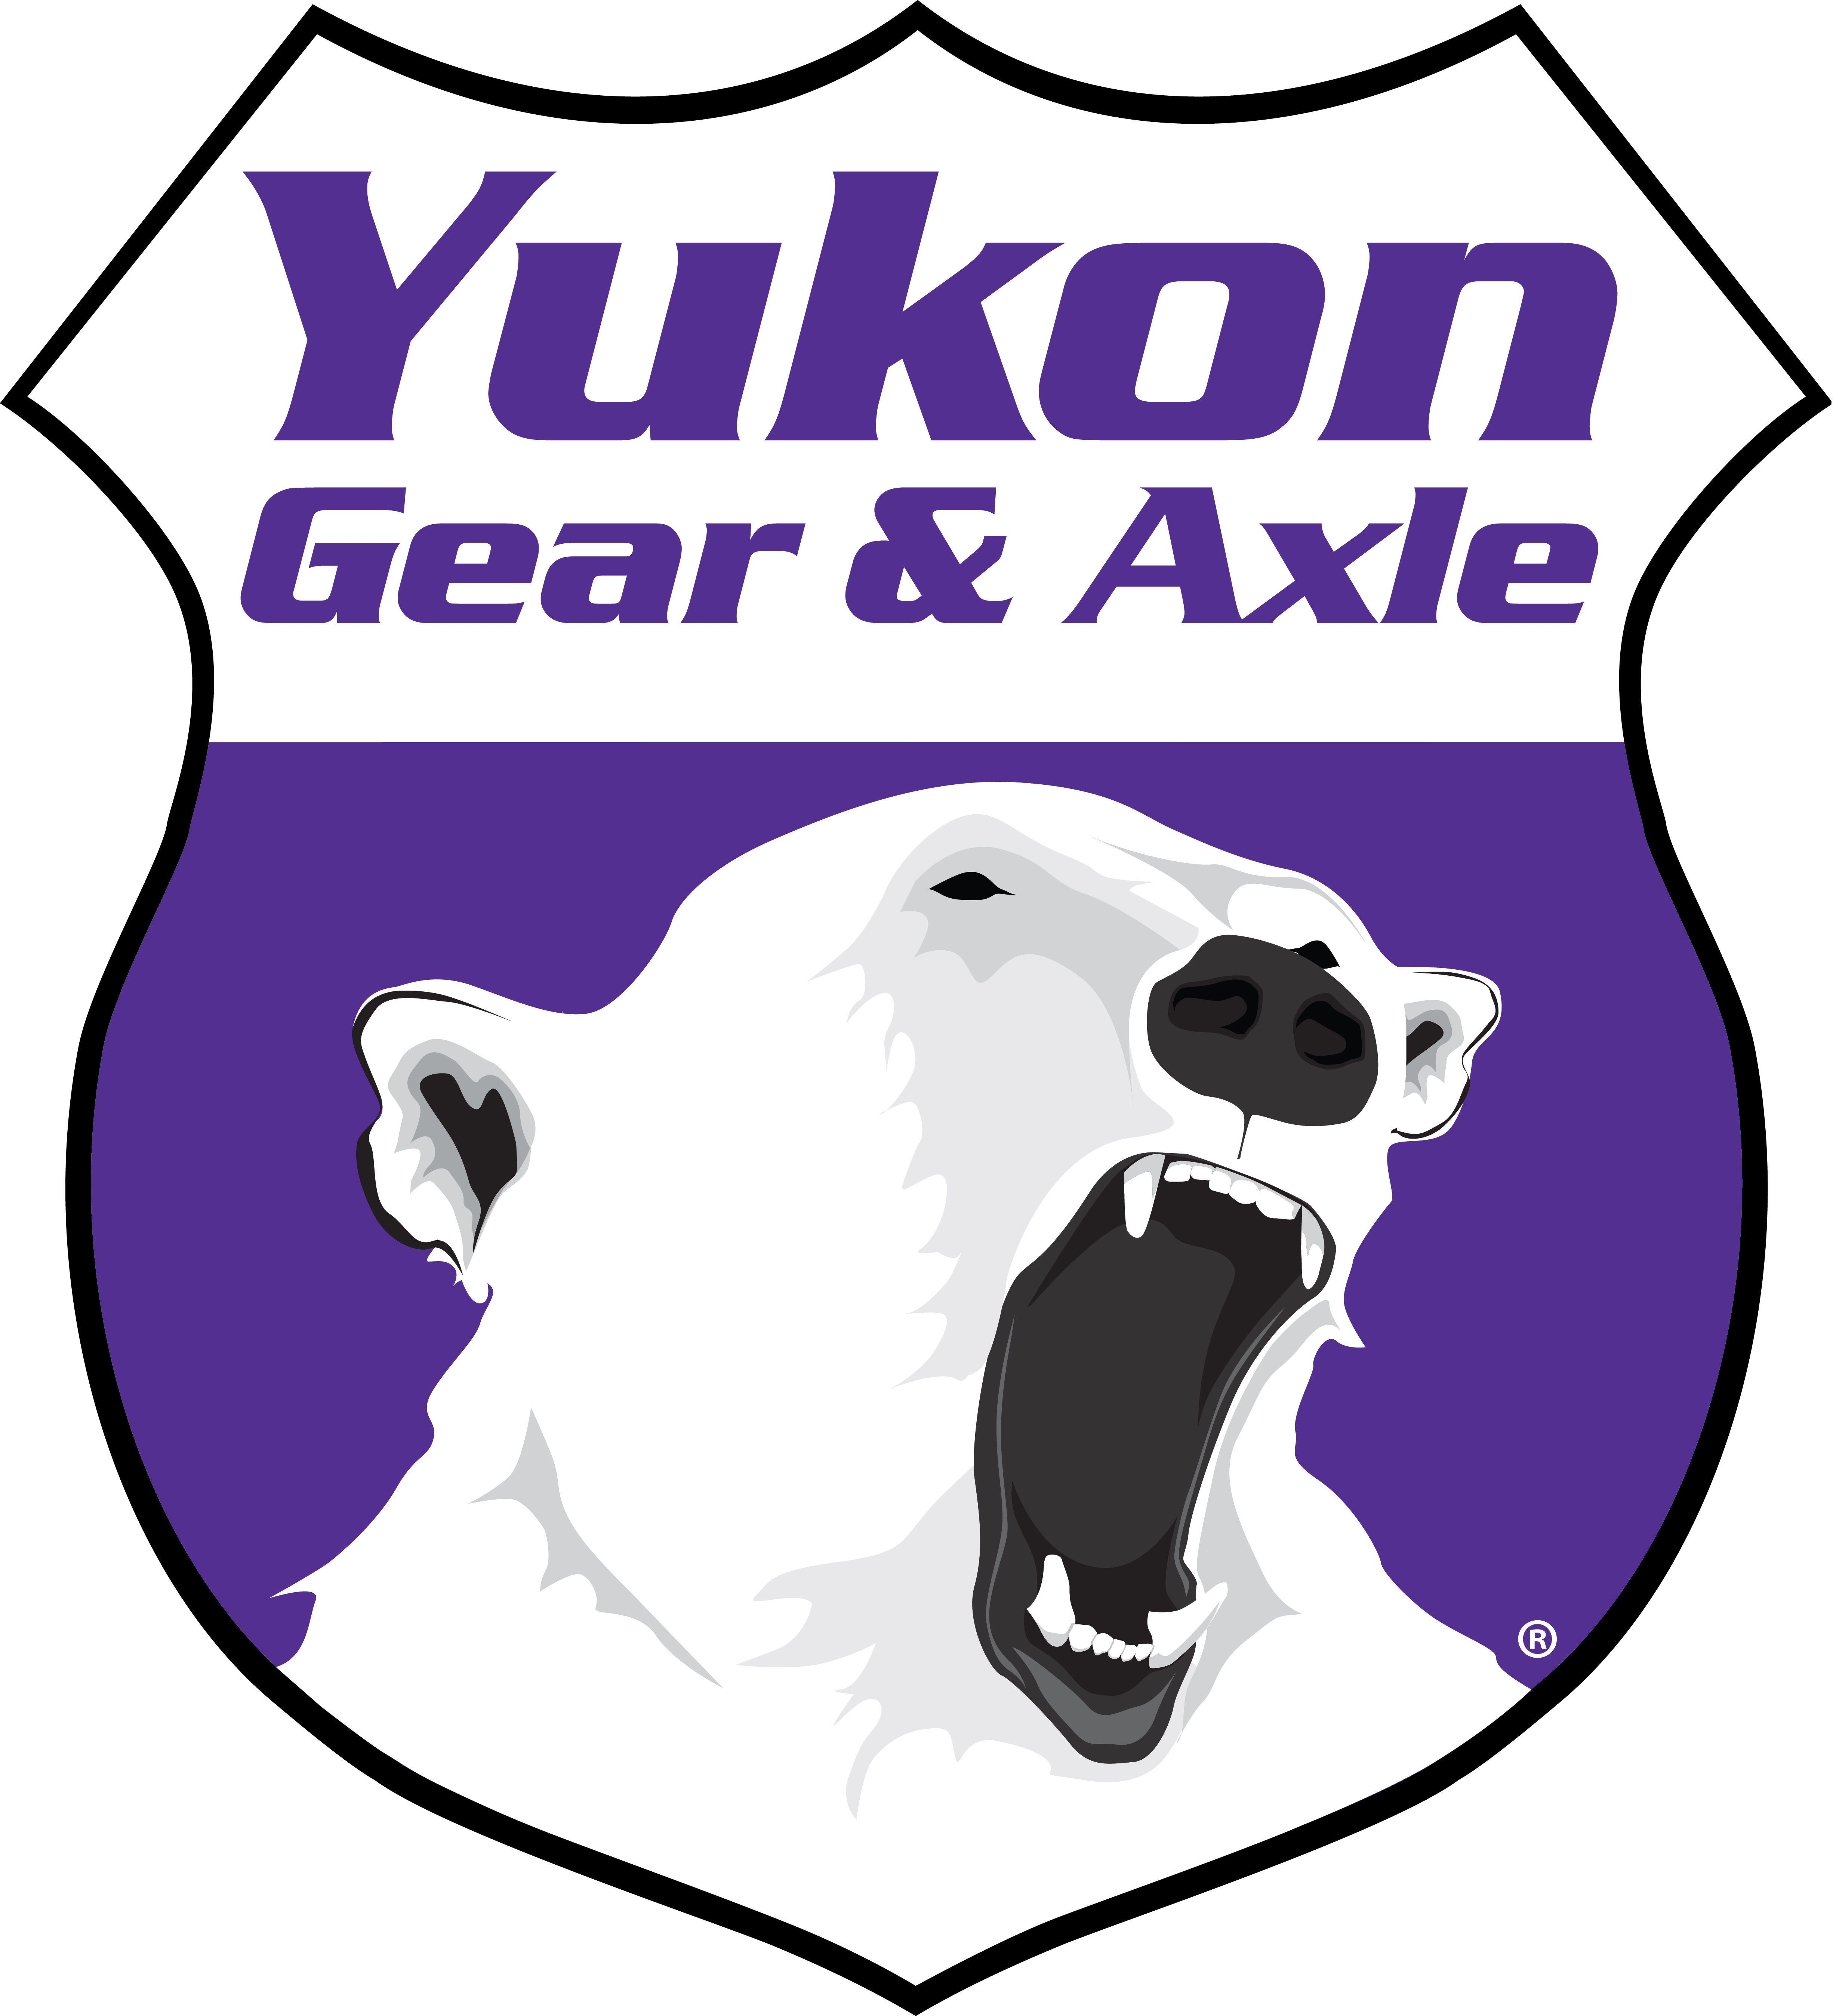 Yukon Bearing install kit for '91-'97 Toyota Landcruiser front differential 